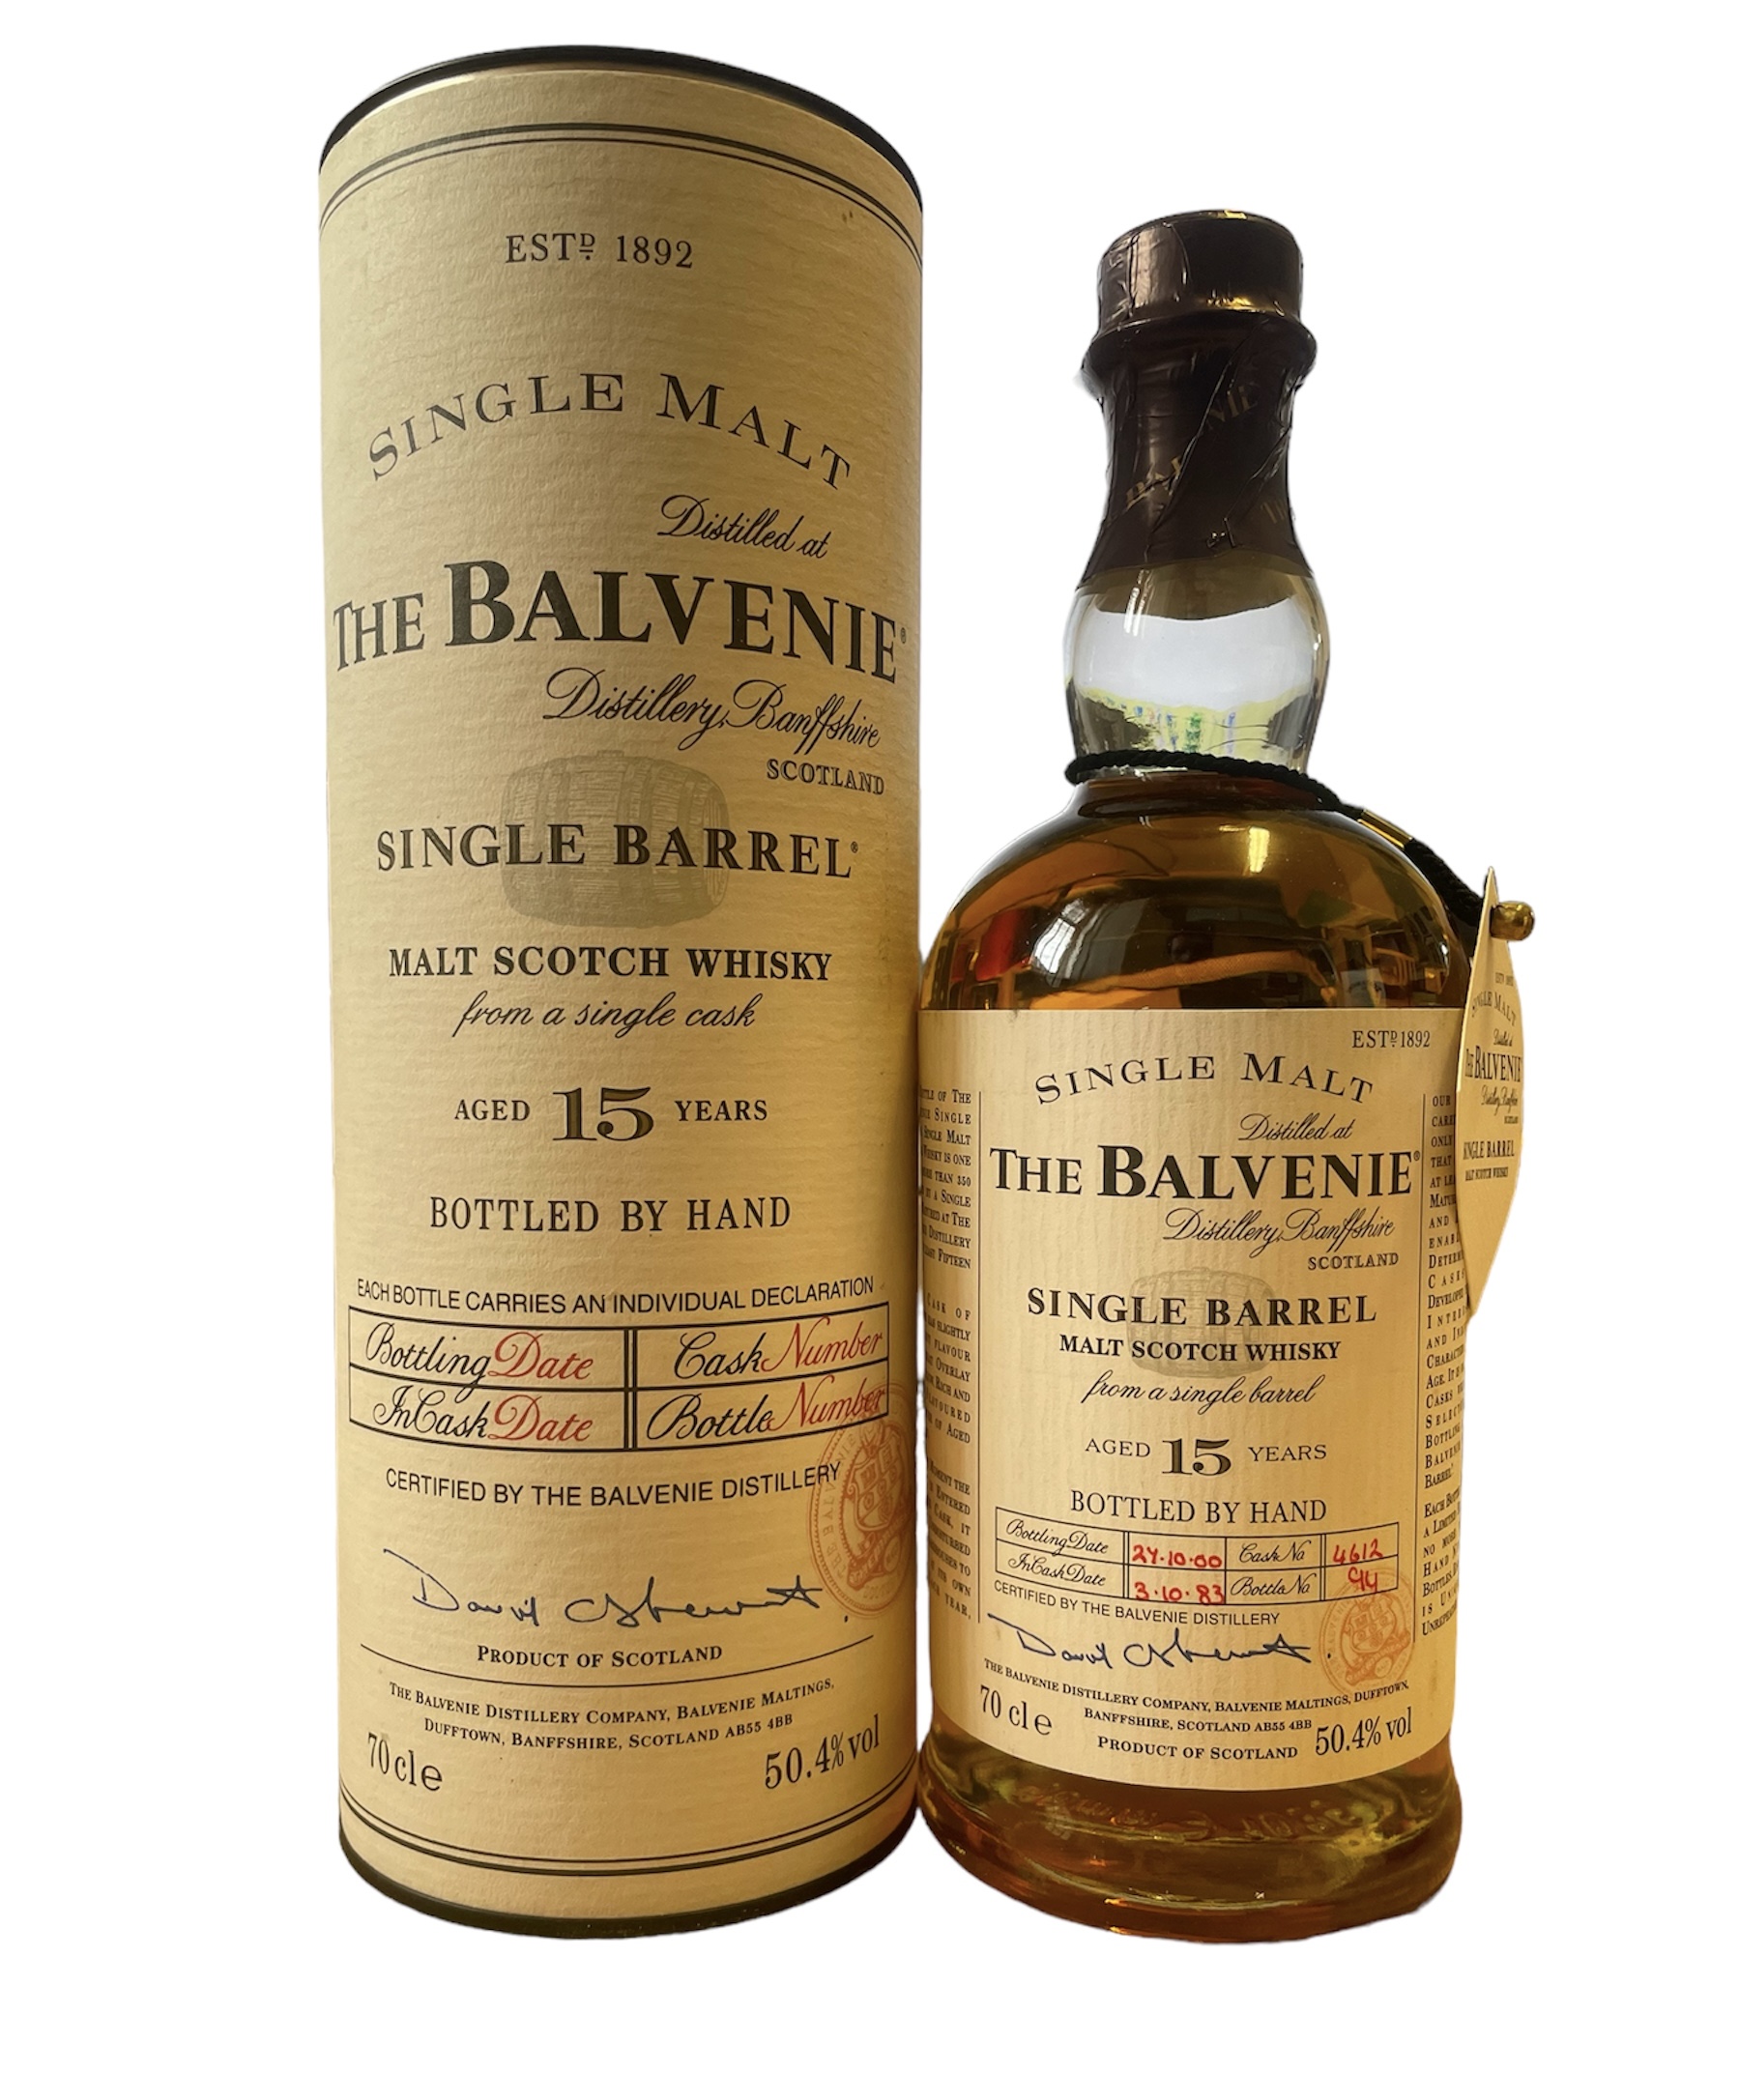 The balvenie single barrel malt scotch wisky aged 15 years 70cl 50.4%vol